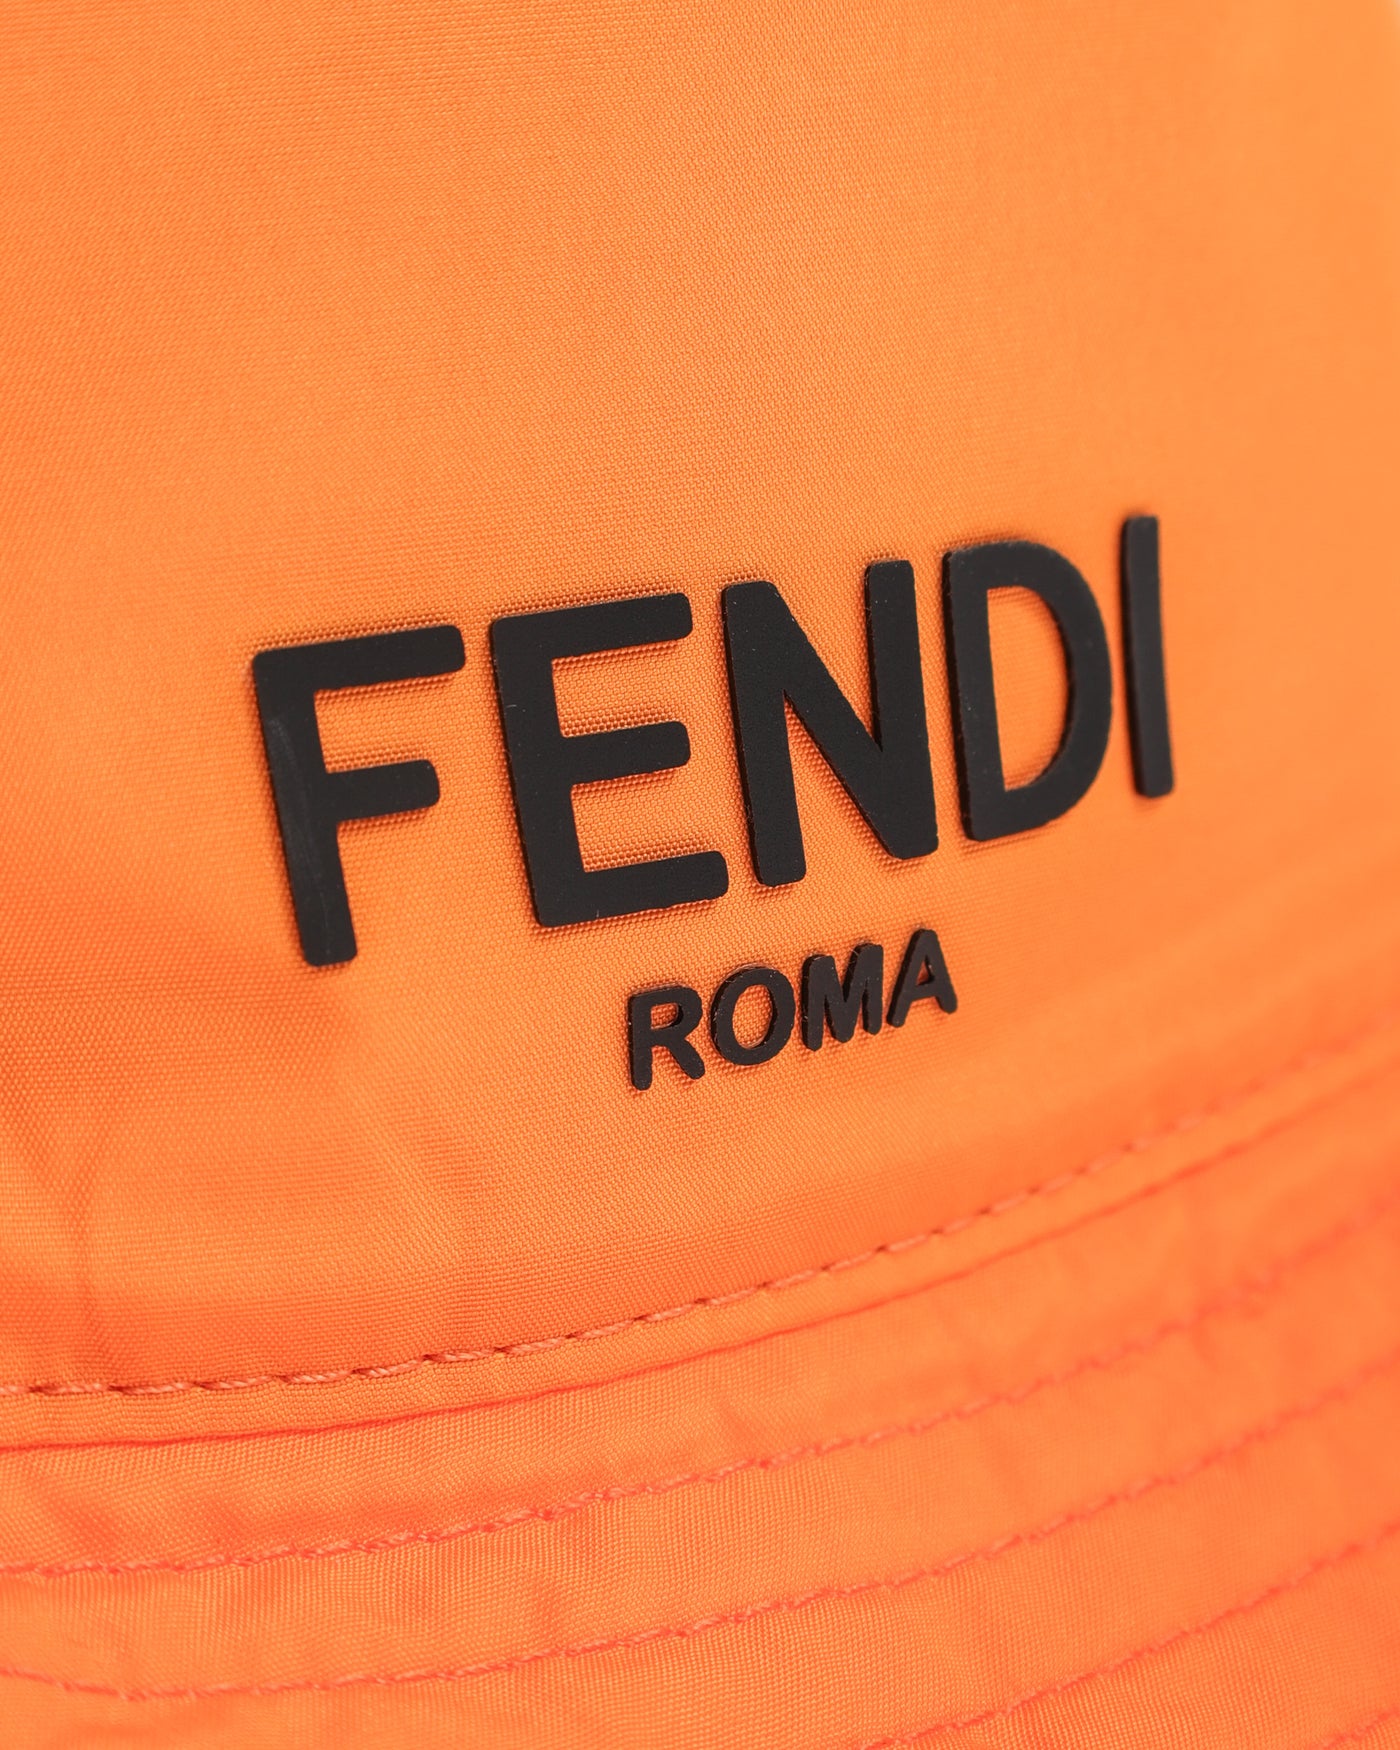 FENDI KIDS REVERSIBLE HAT